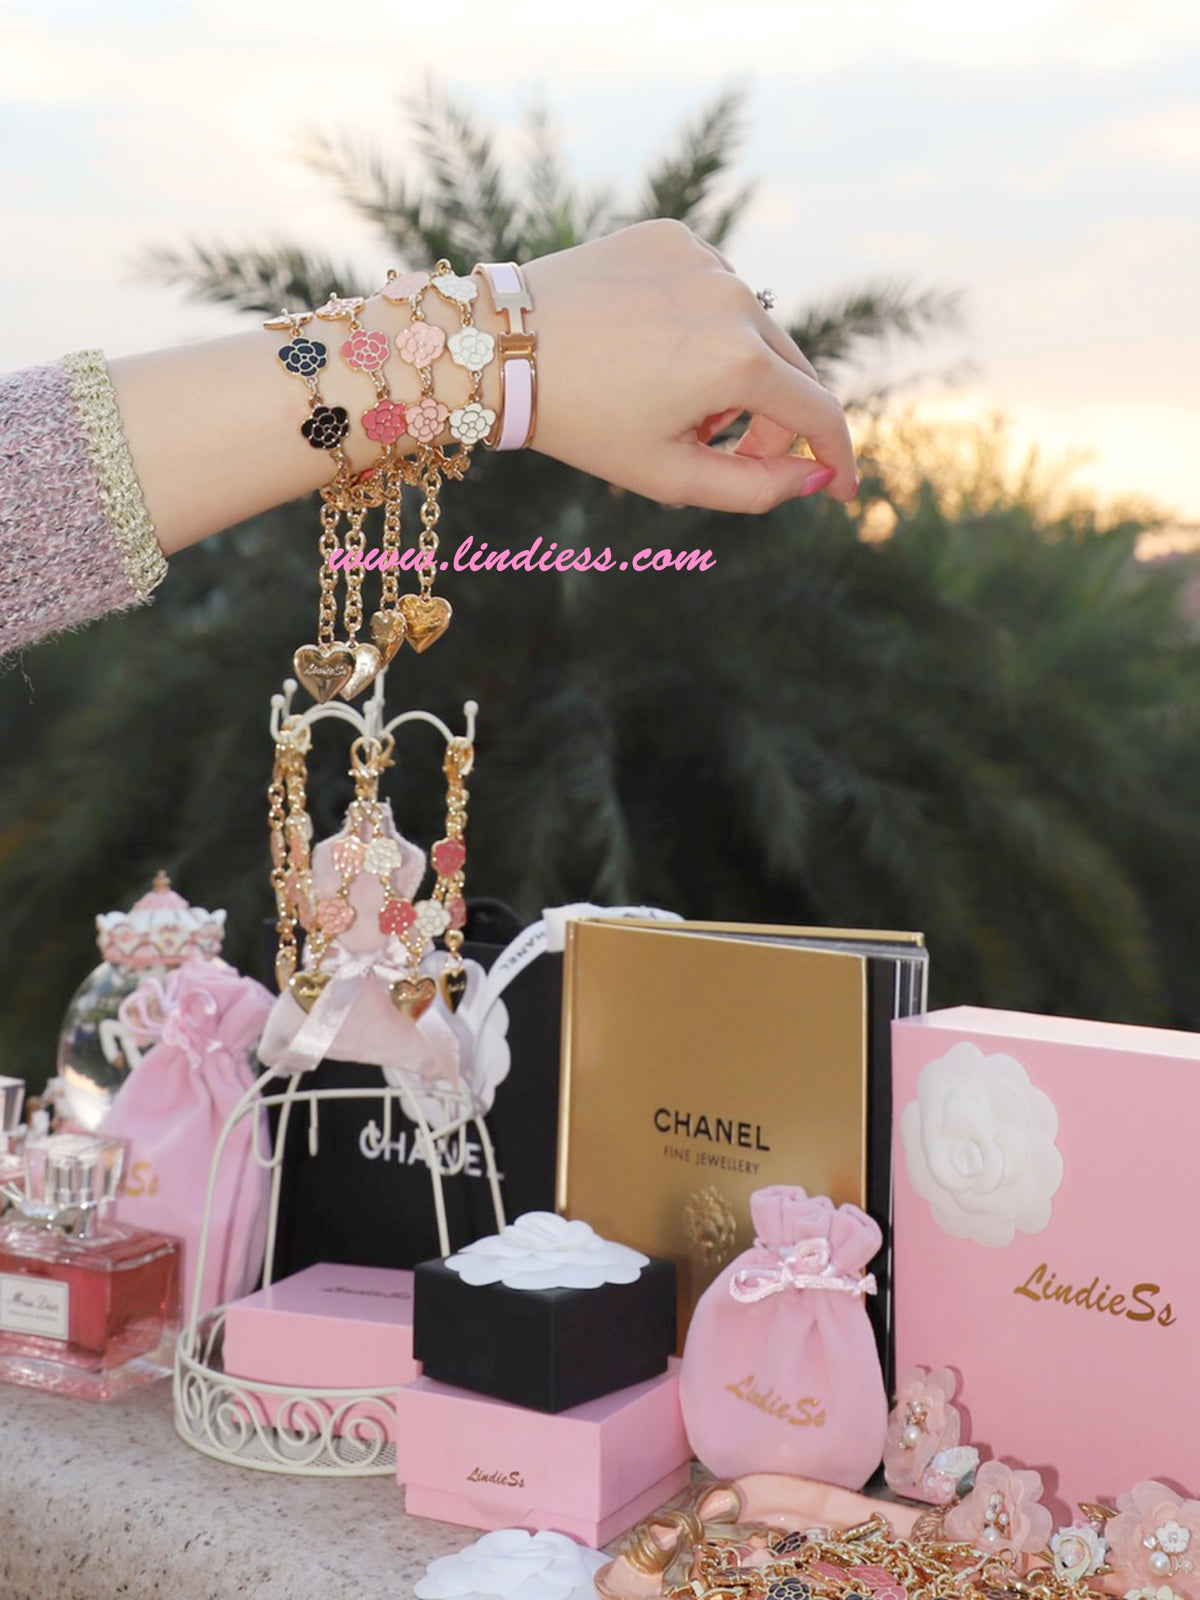 Chanel Charm Bracelet Authentic With Original Box